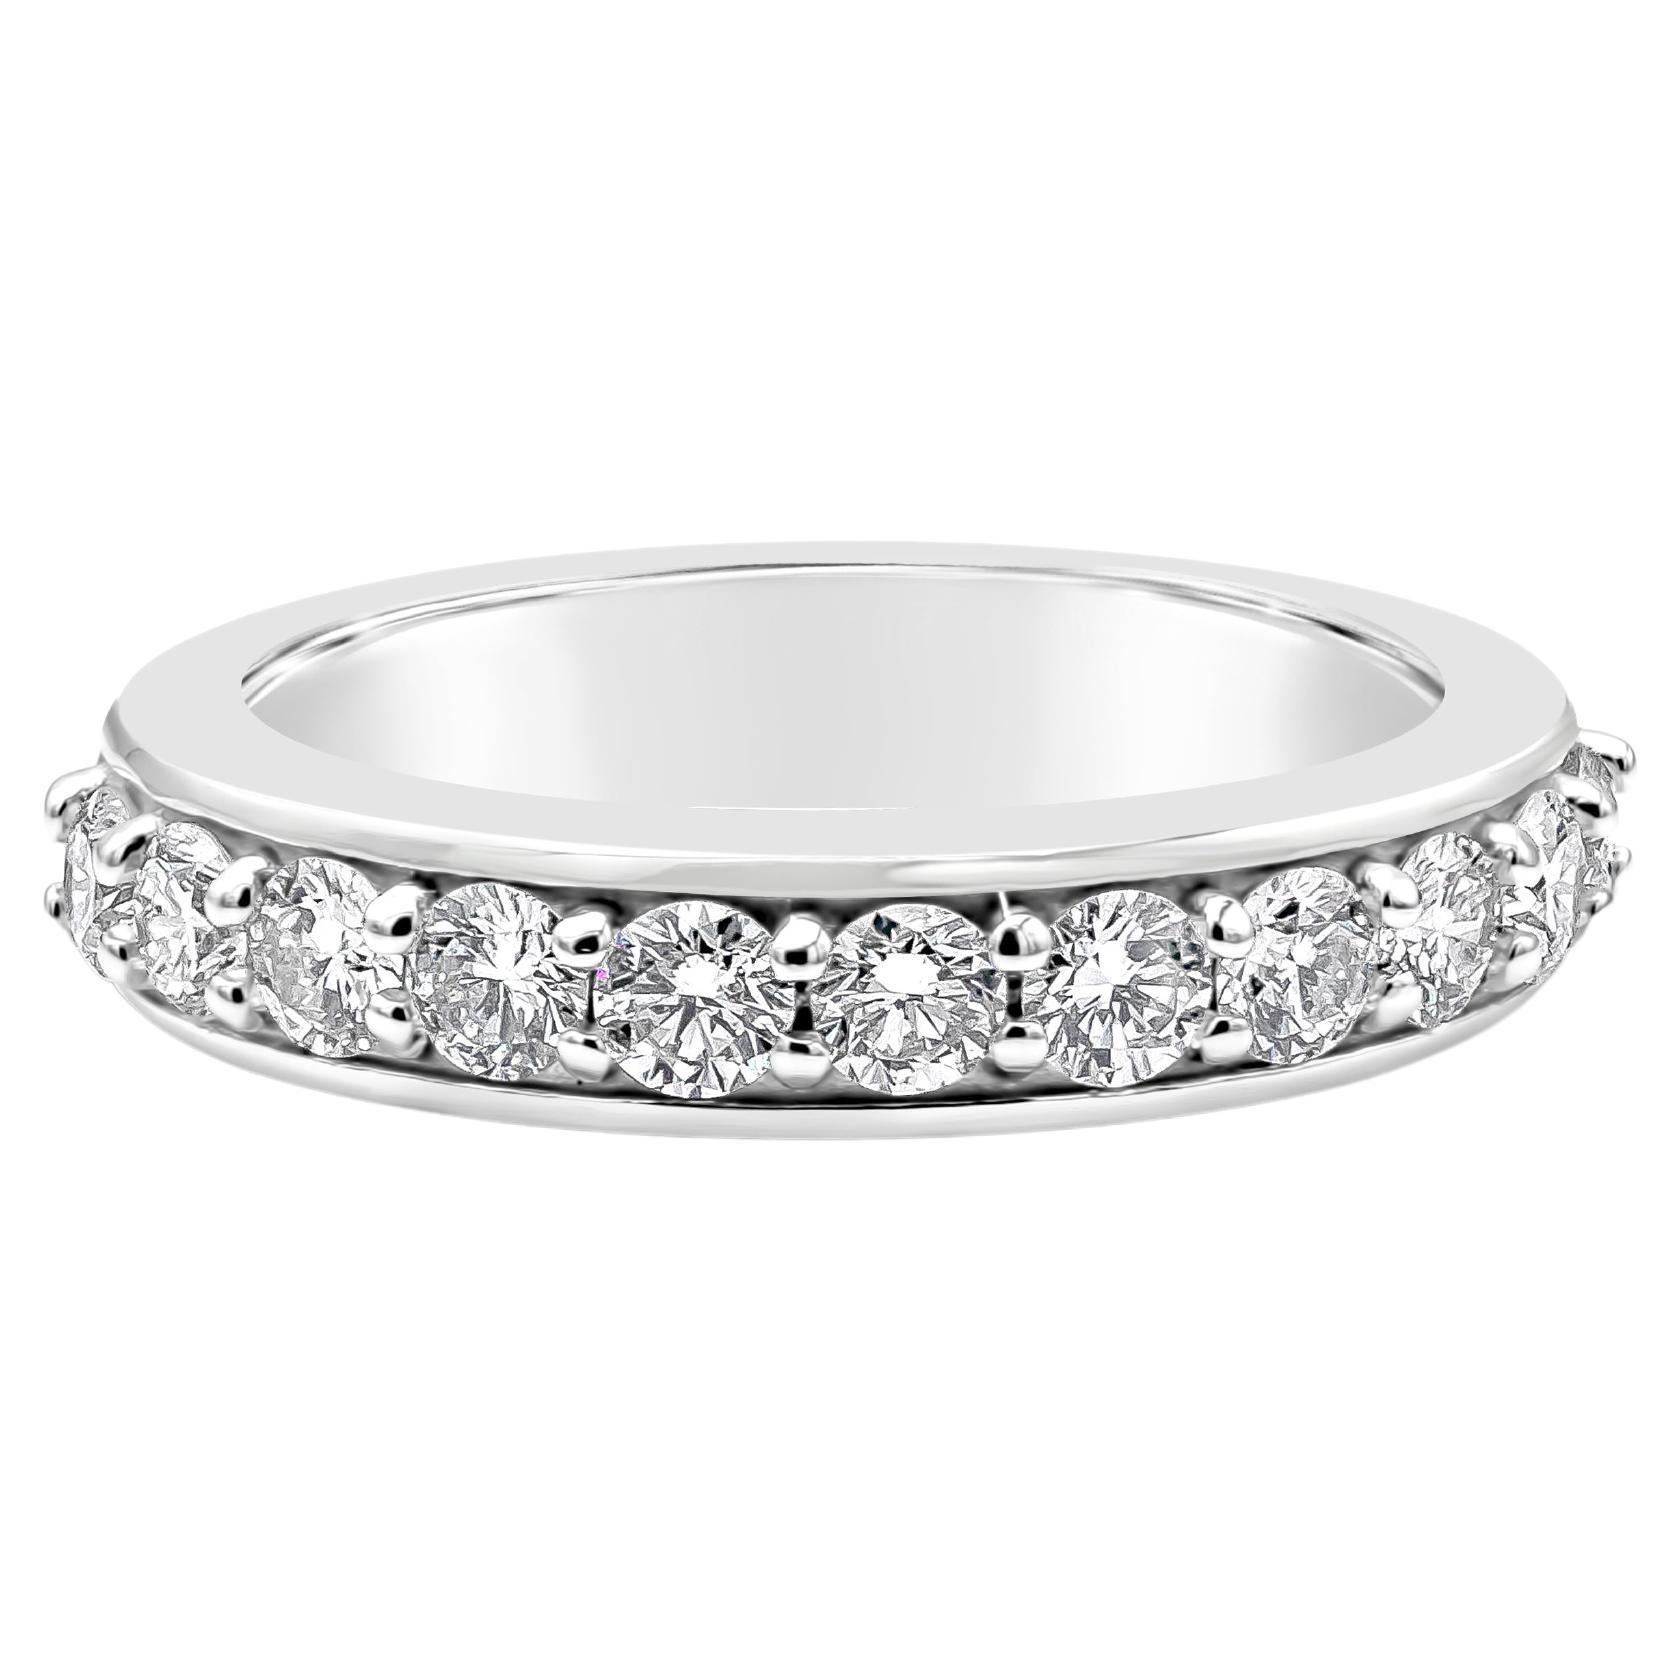 Roman Malakov 0.92 Carat Total Round Diamond Wedding Band Ring